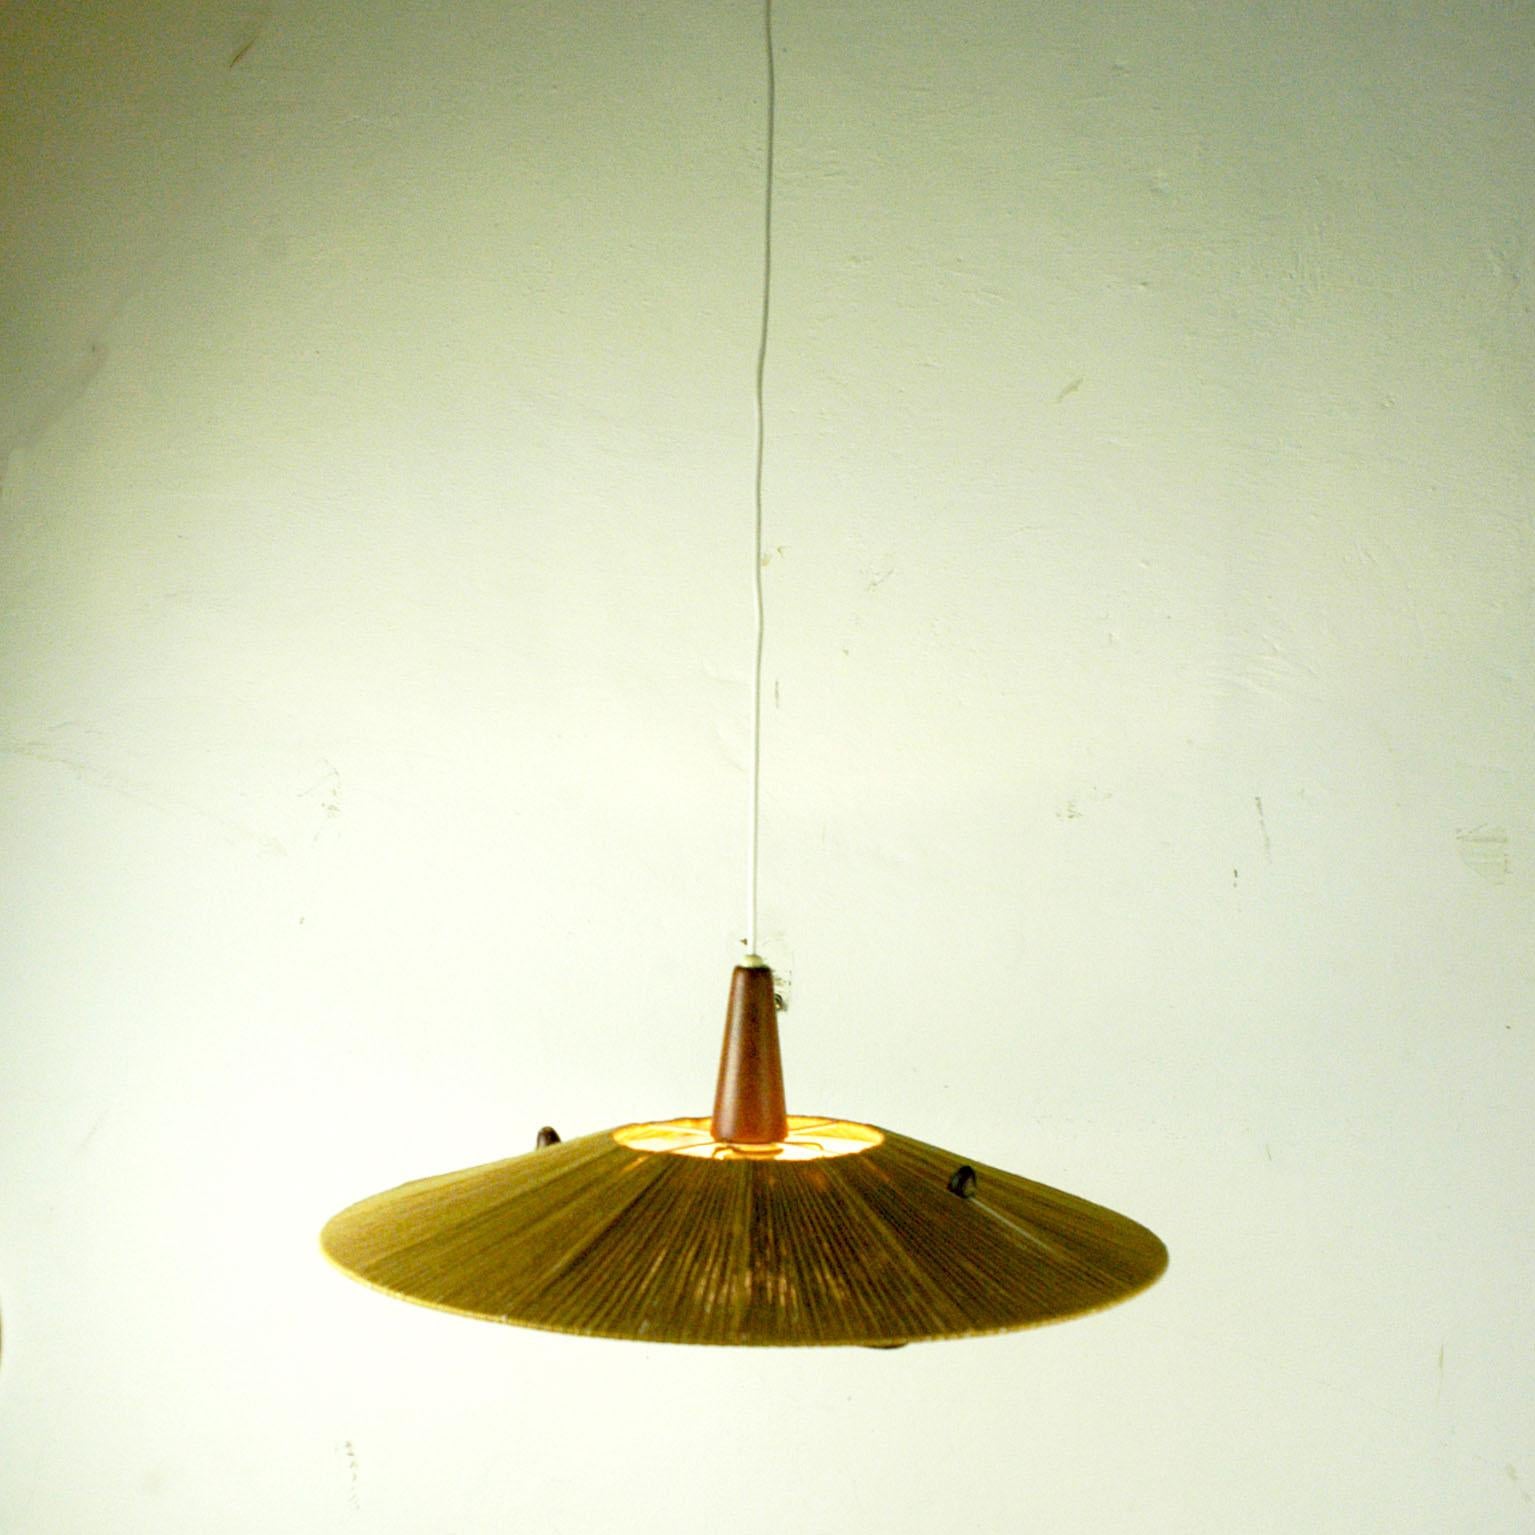 Midcentury Modern Teak, Cord and Perspex Pendant Lamp by Temde (Mitte des 20. Jahrhunderts)